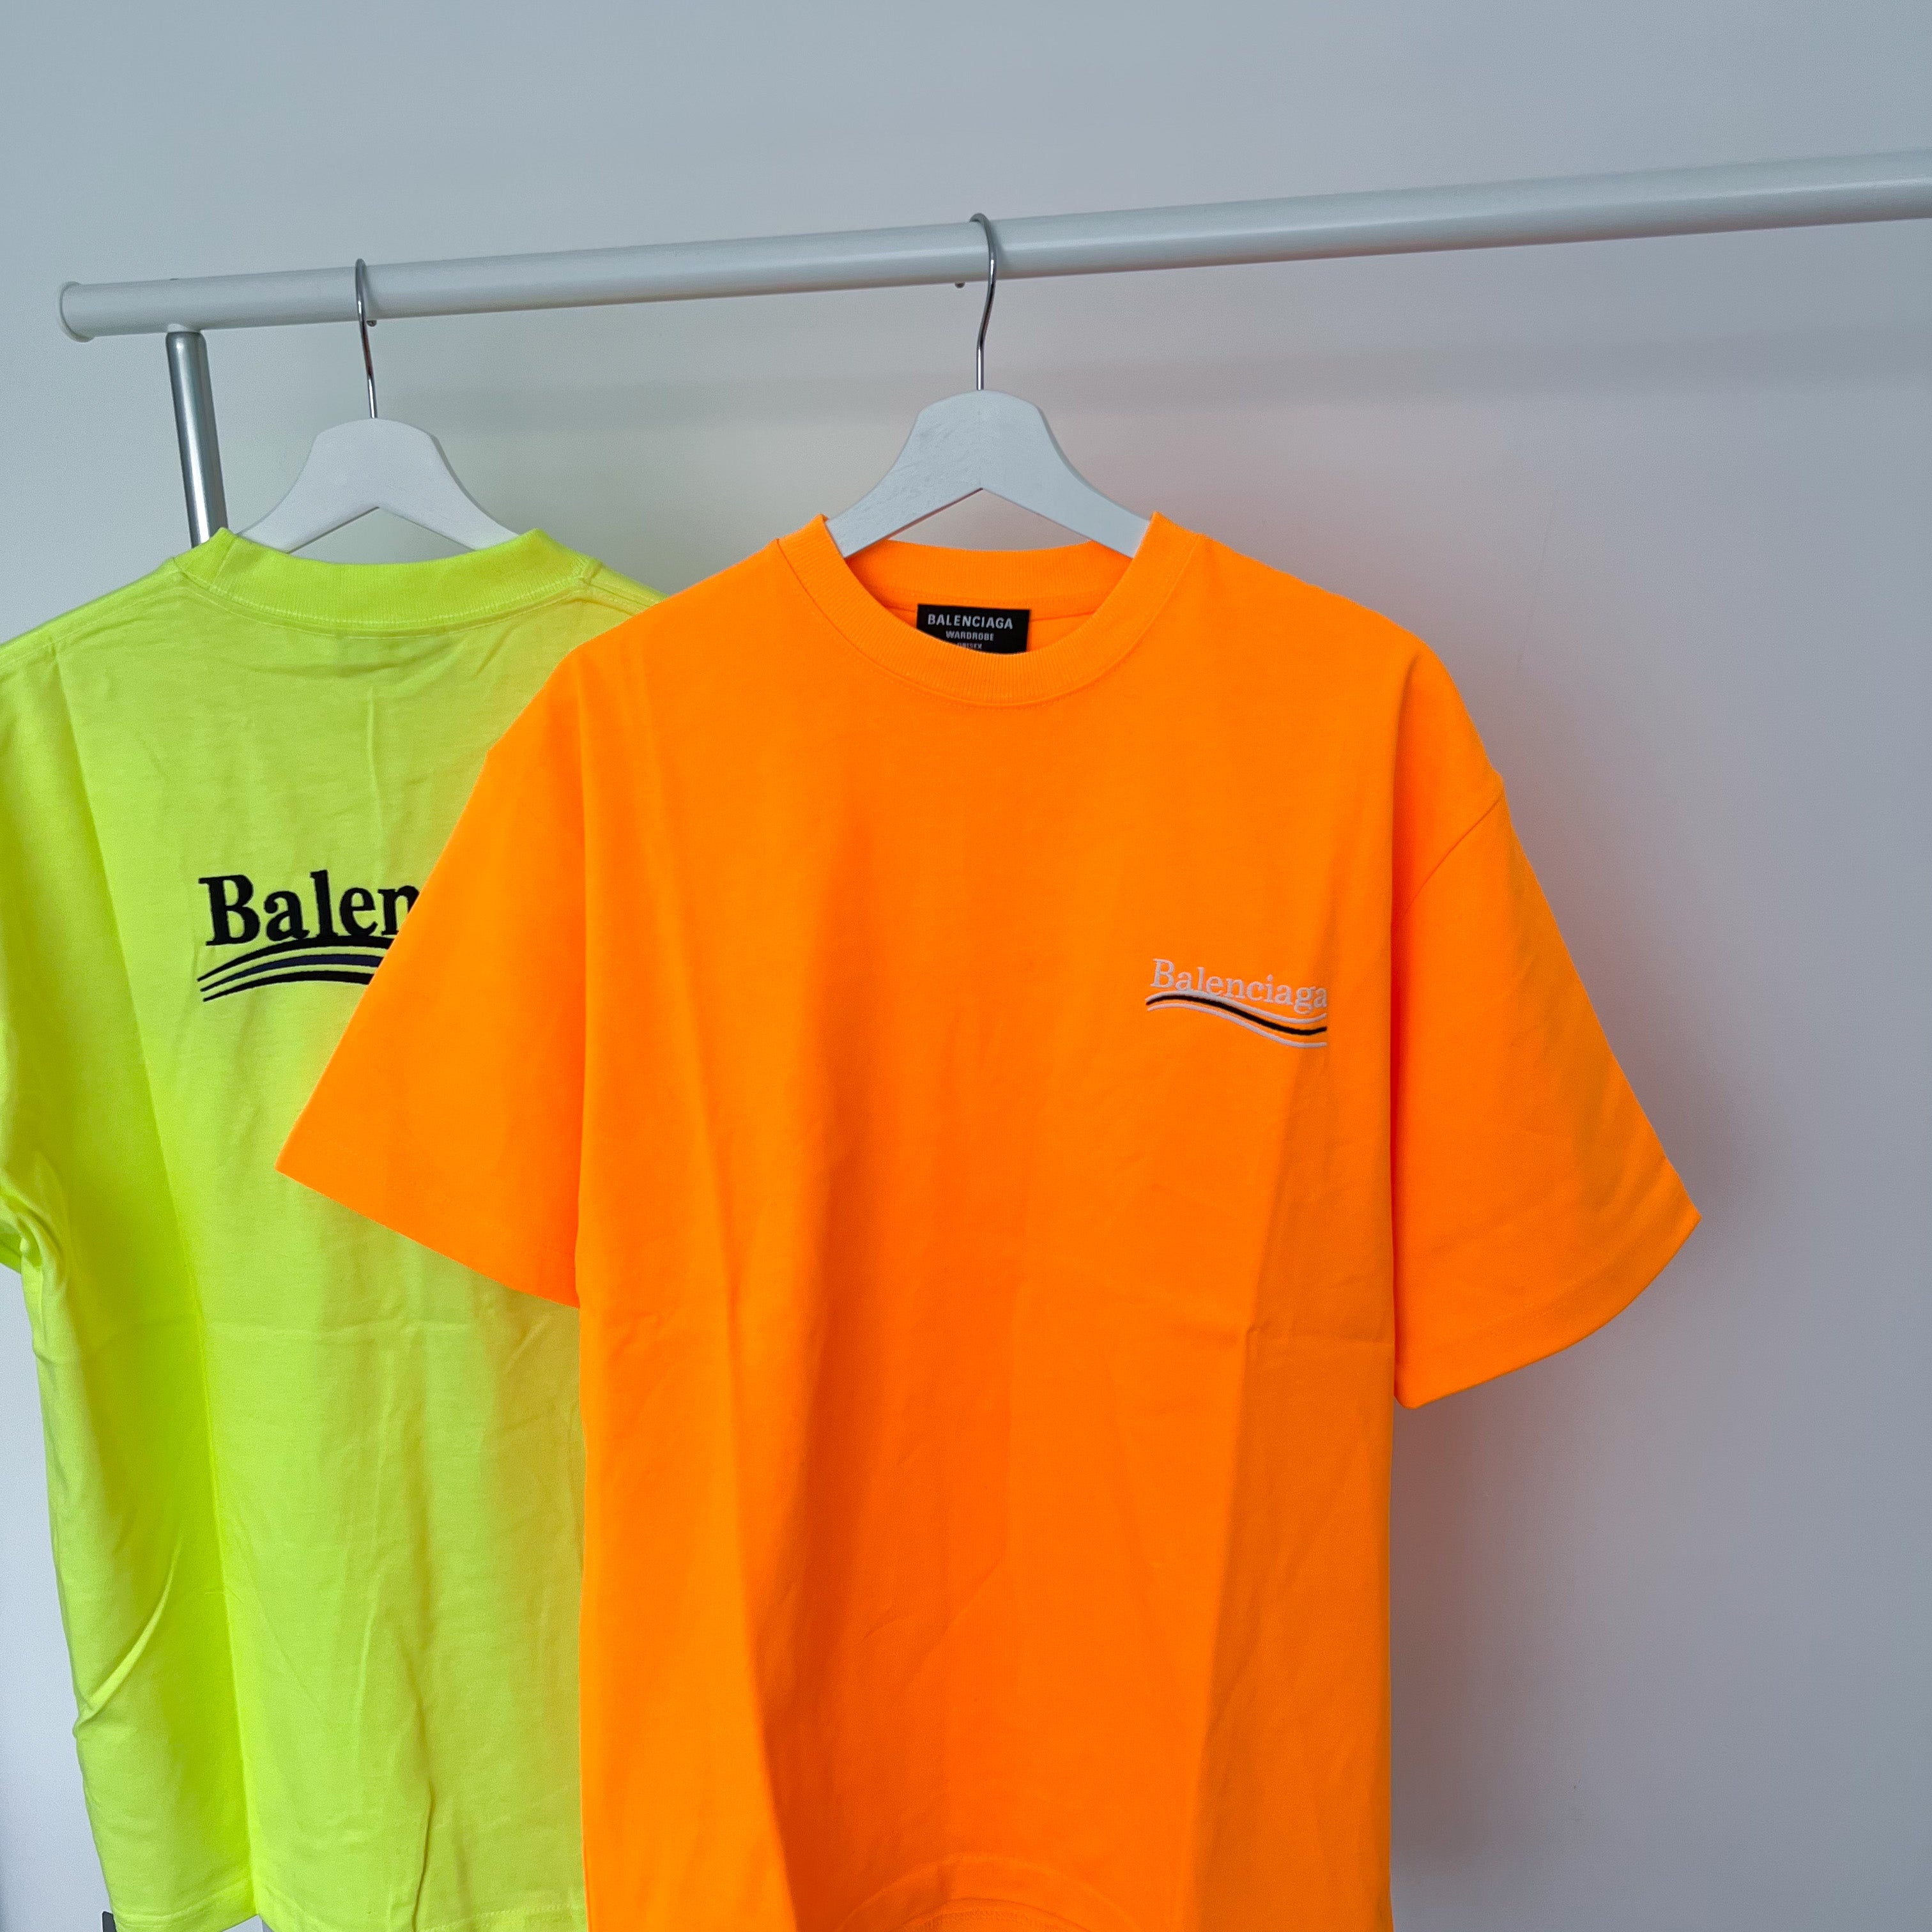 Balenciaga Embroidered Political Campaign Tee - Orange